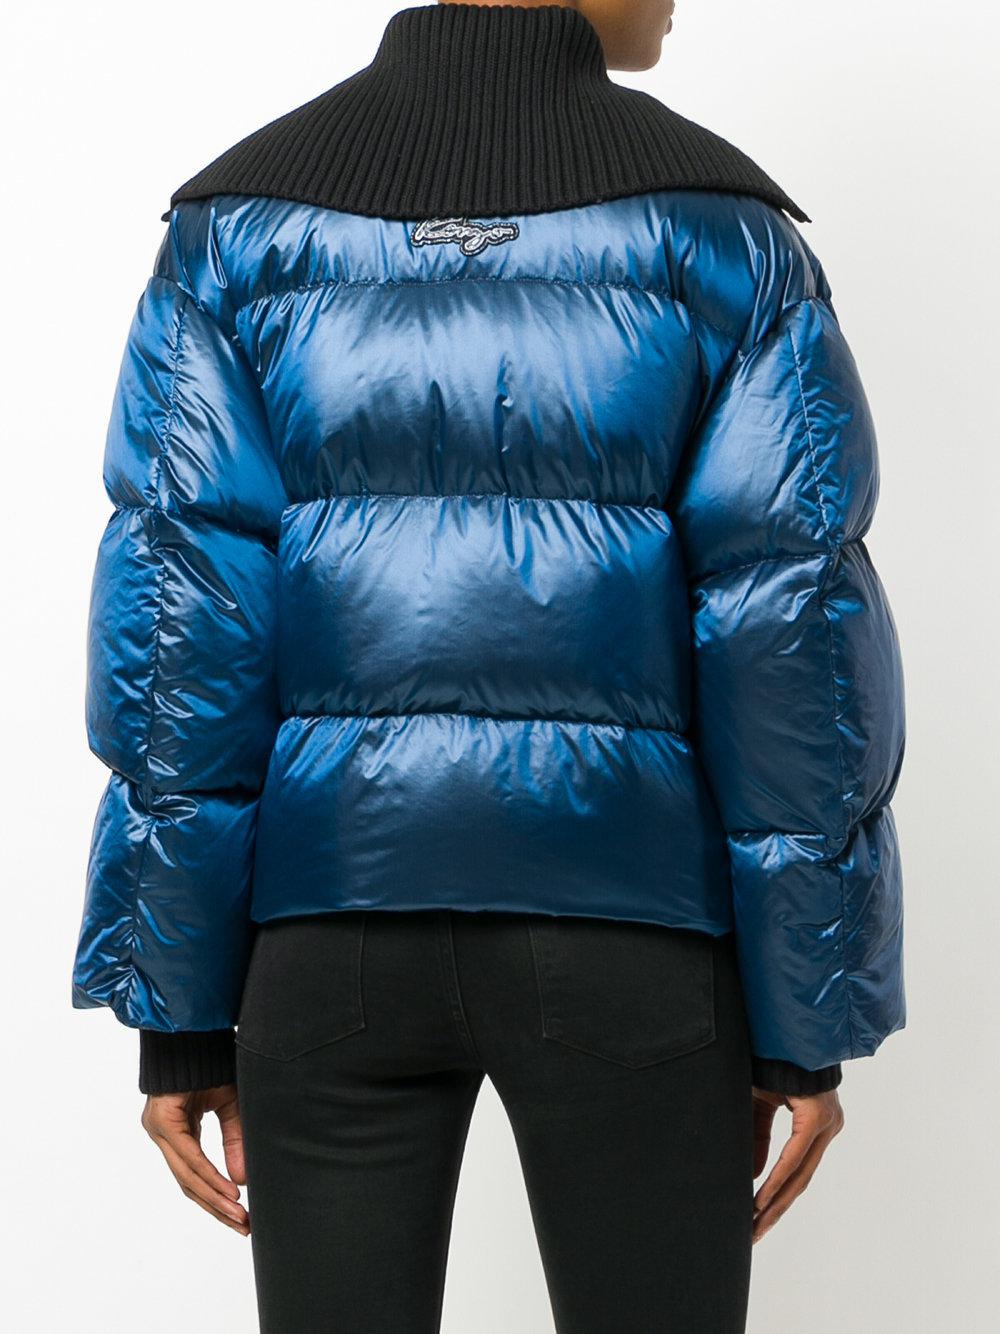 KENZO Synthetic Puffer Jacket in Blue - Lyst